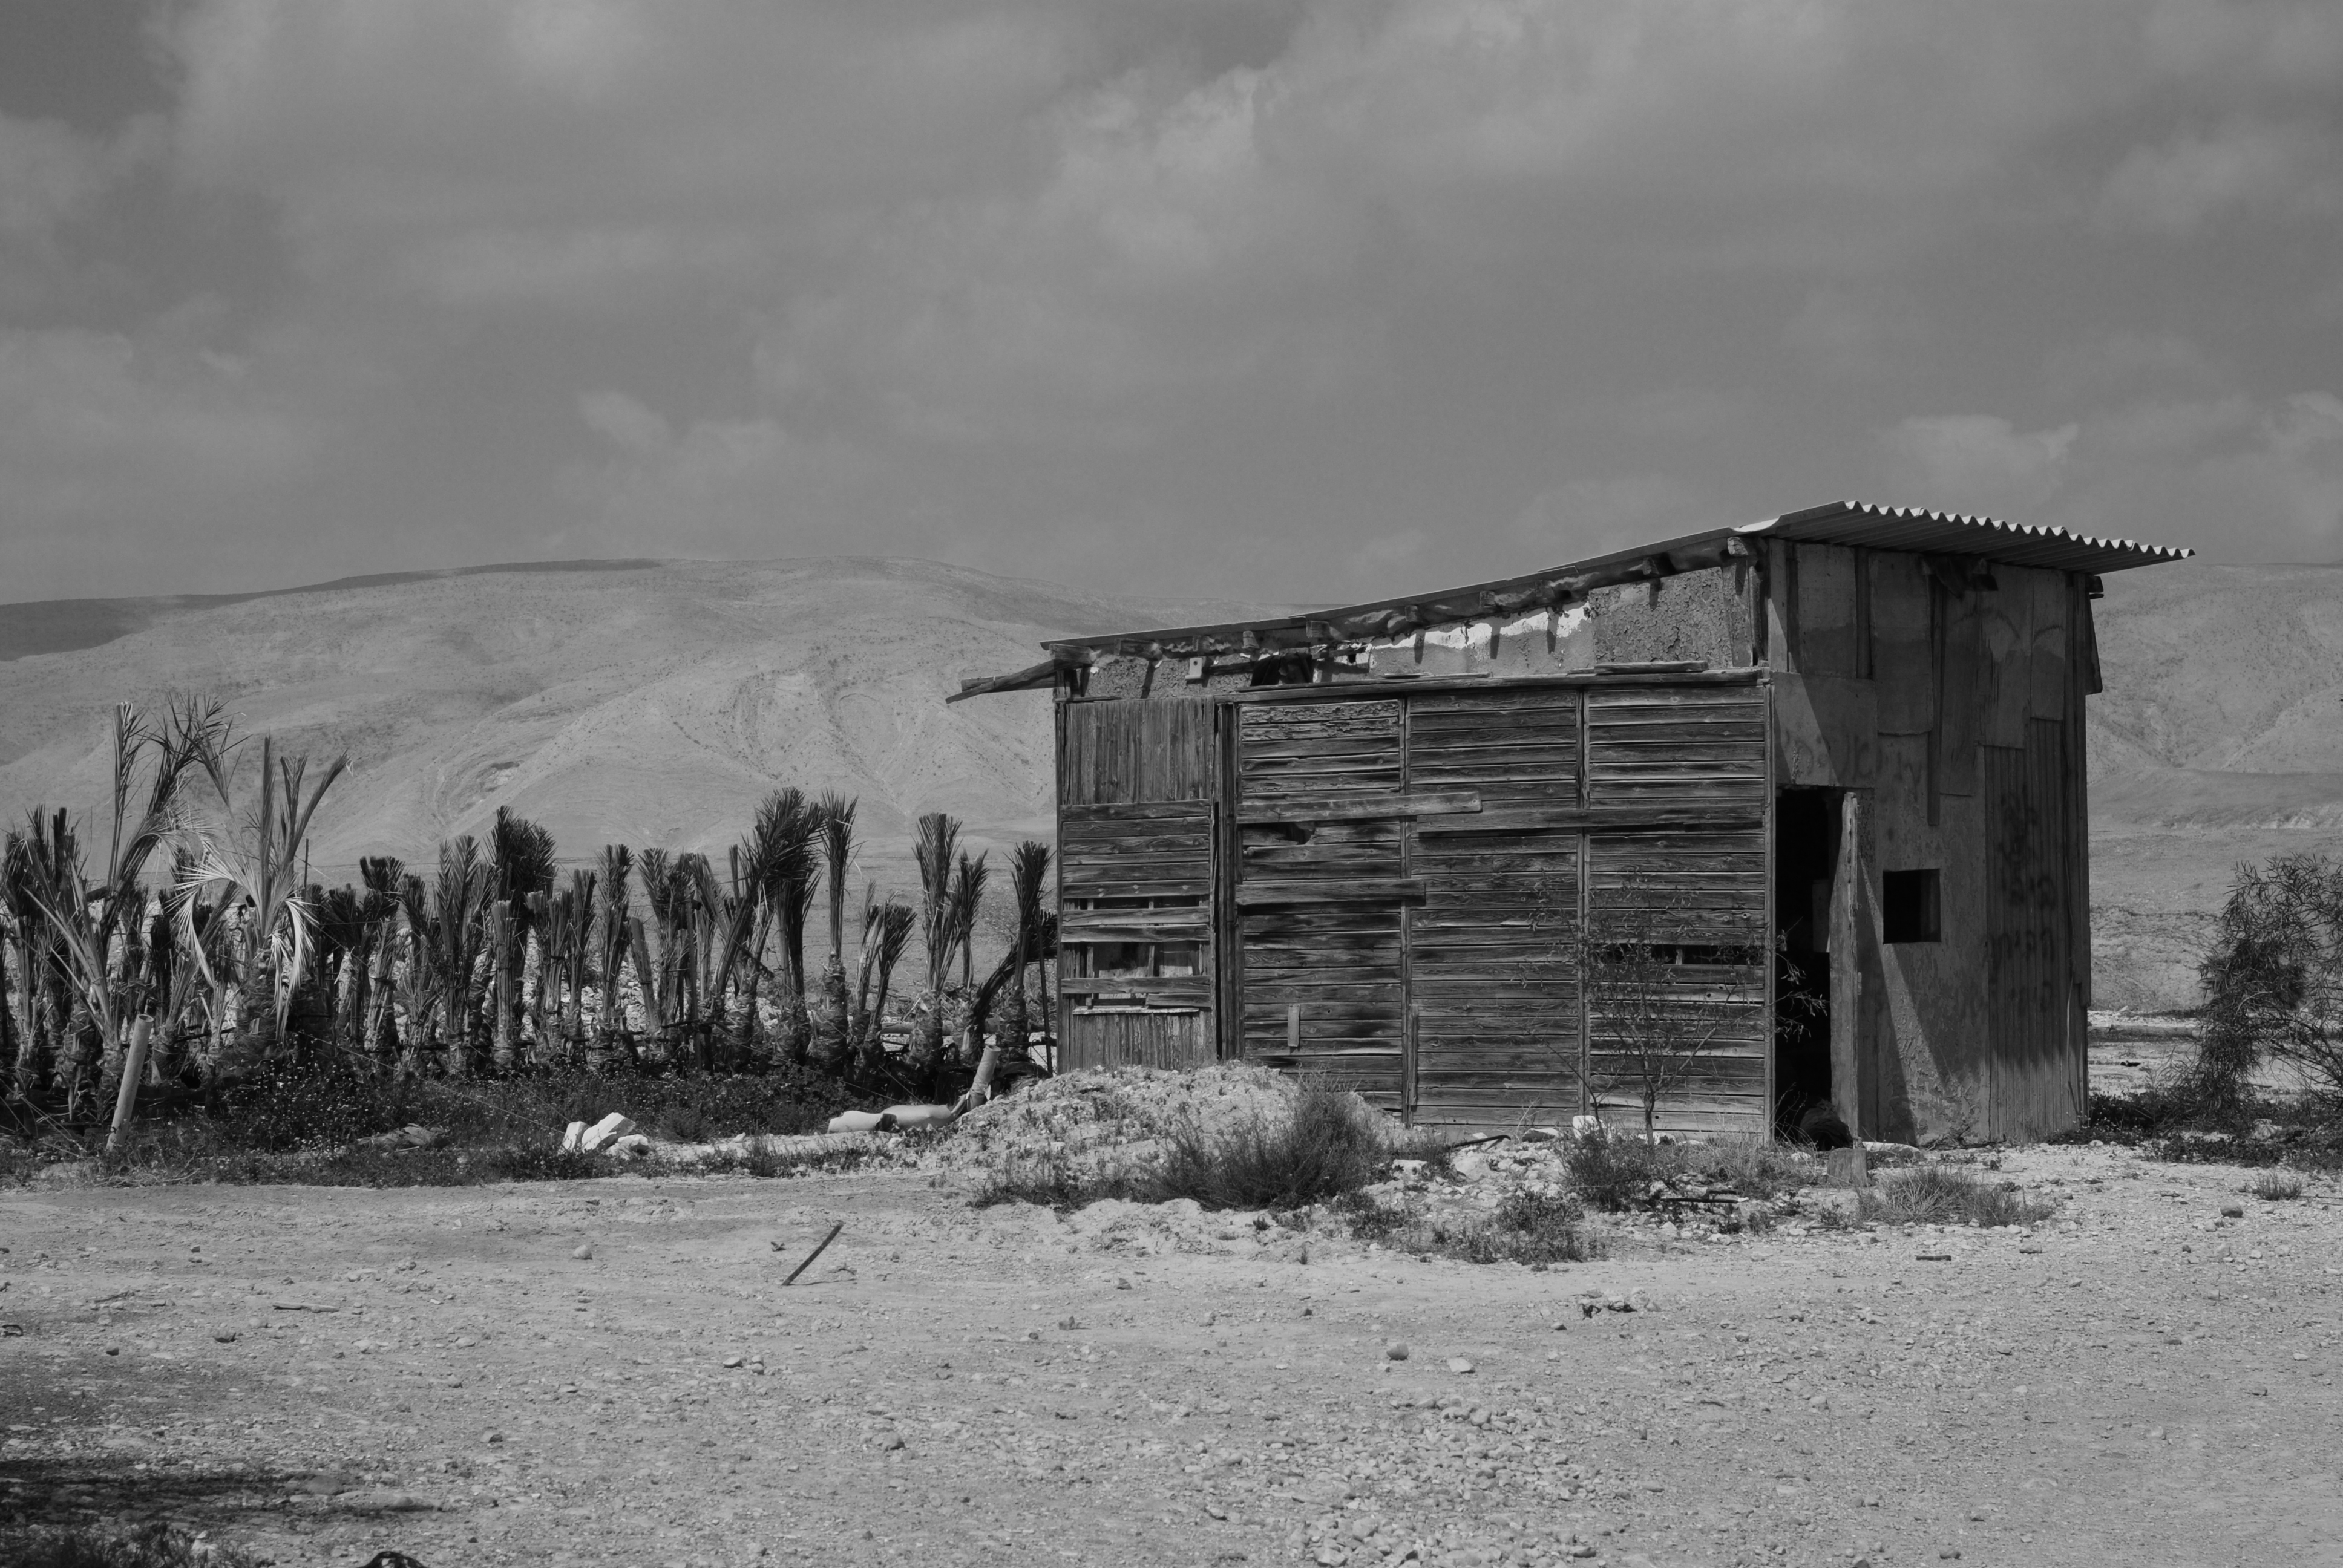 File:Old shack (3449849944).jpg - Wikimedia Commons